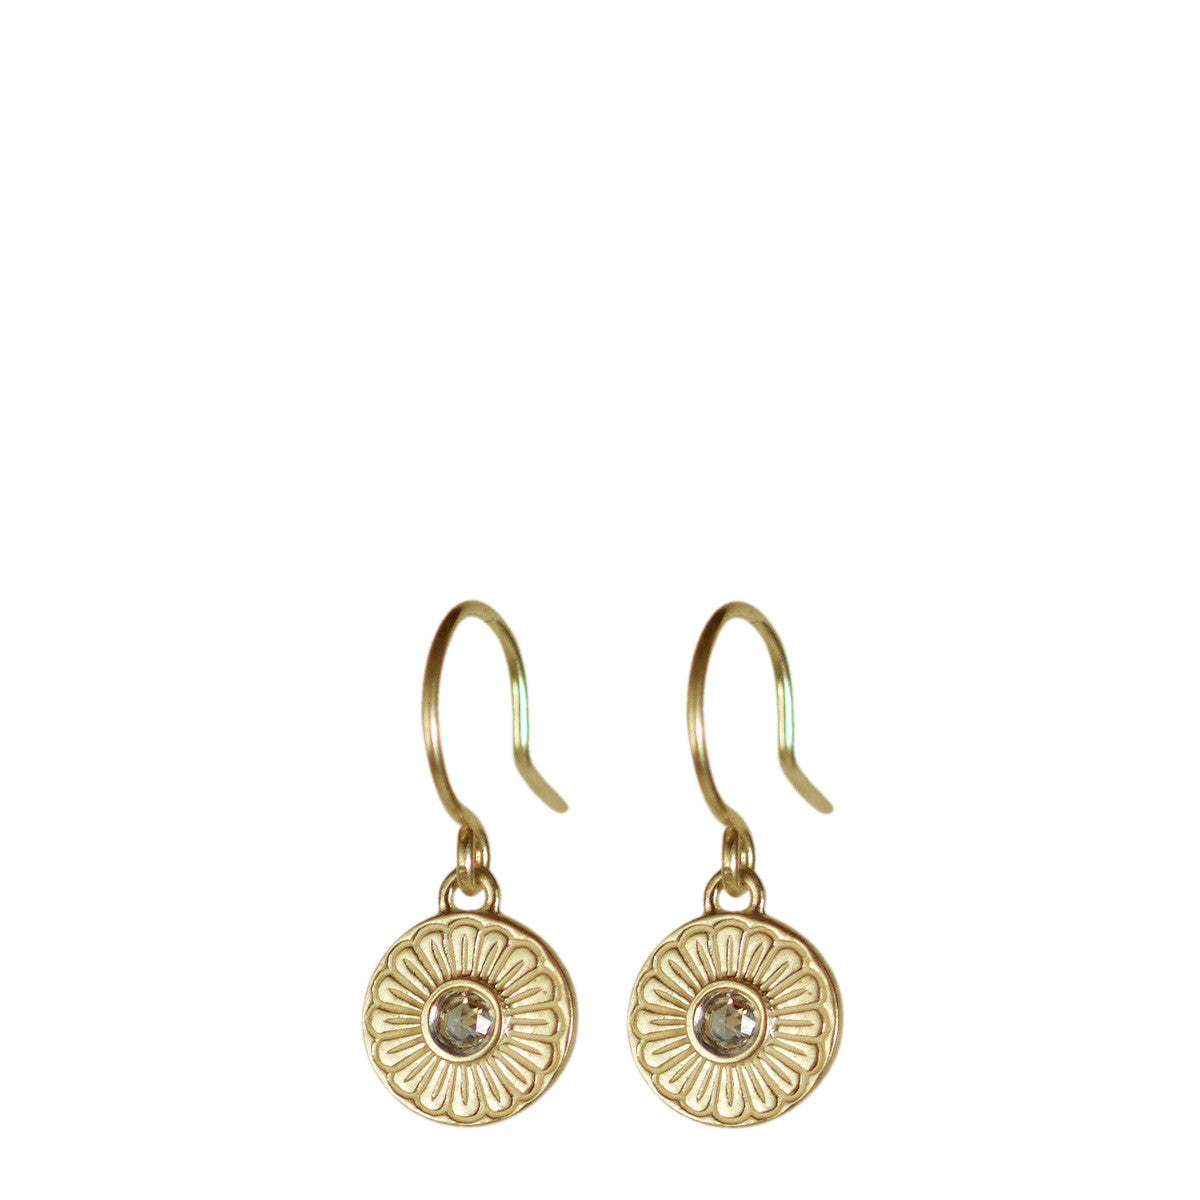 10K Gold Flower Drop Earrings with Brown Diamonds